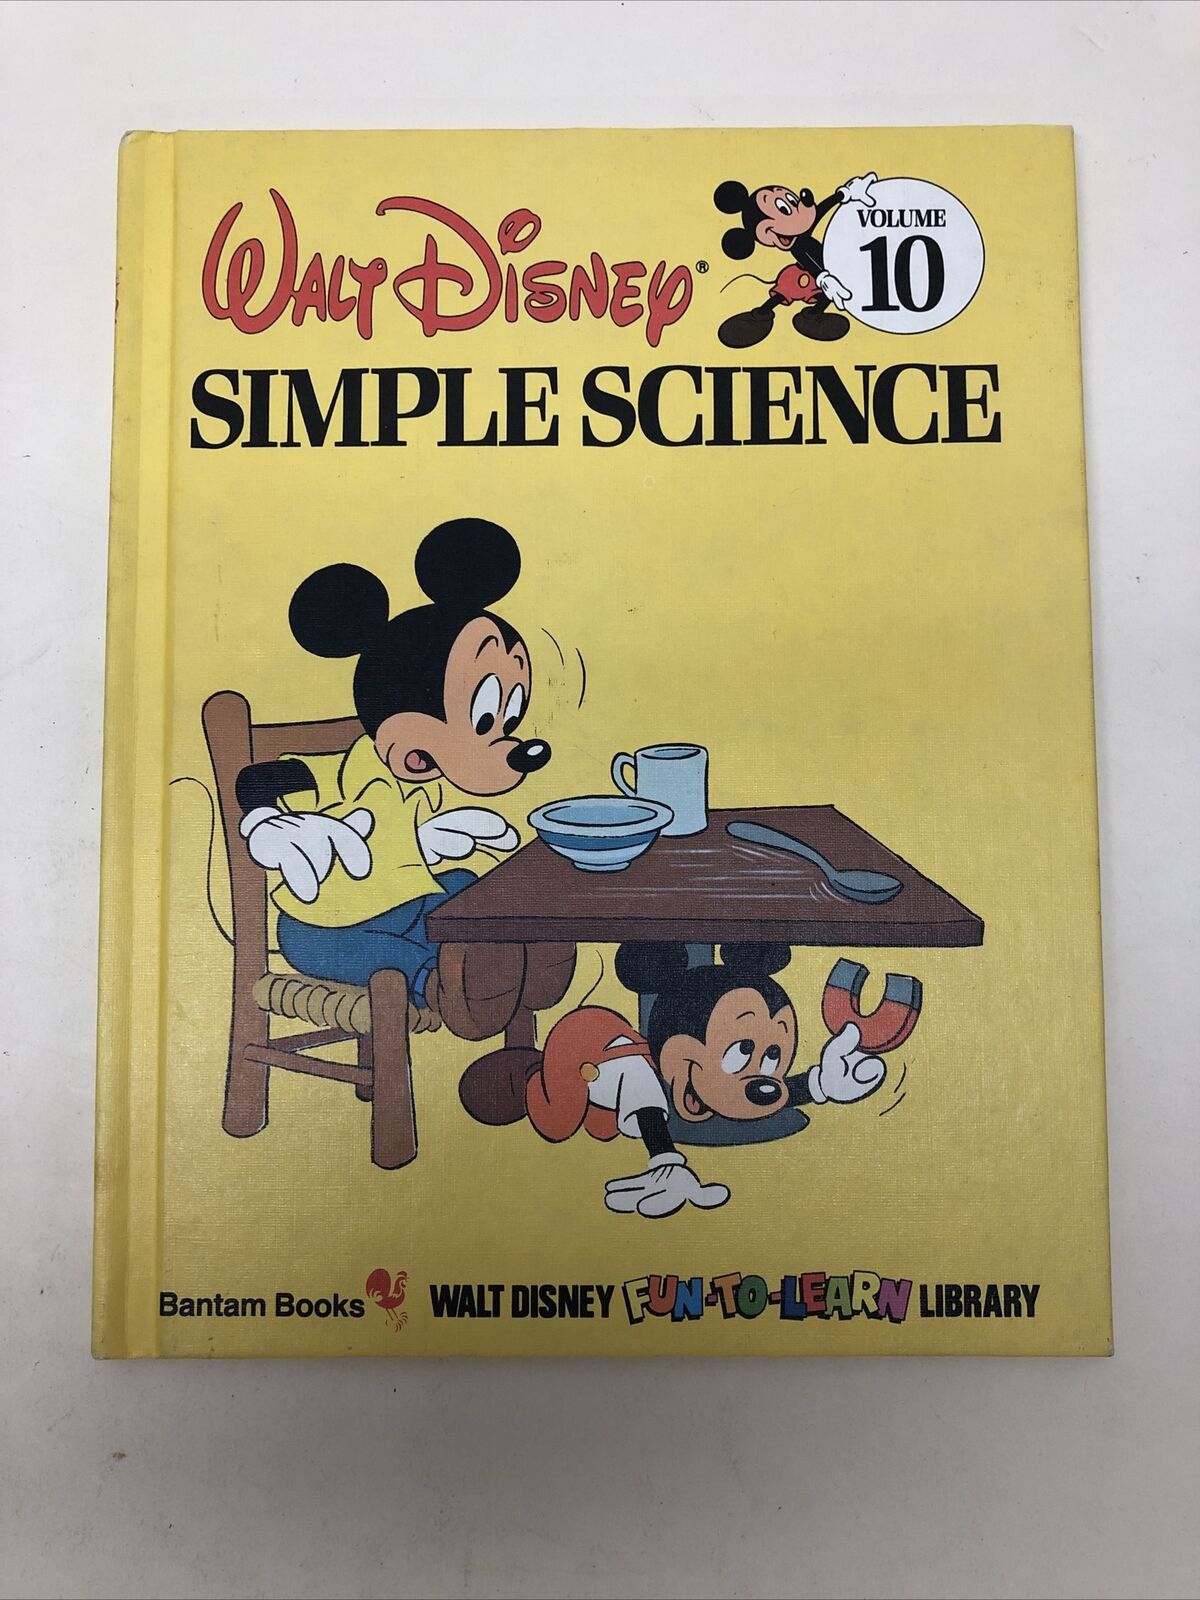 Vintage 1983 Walt Disney Simple Science Volume 10 Children’s Book